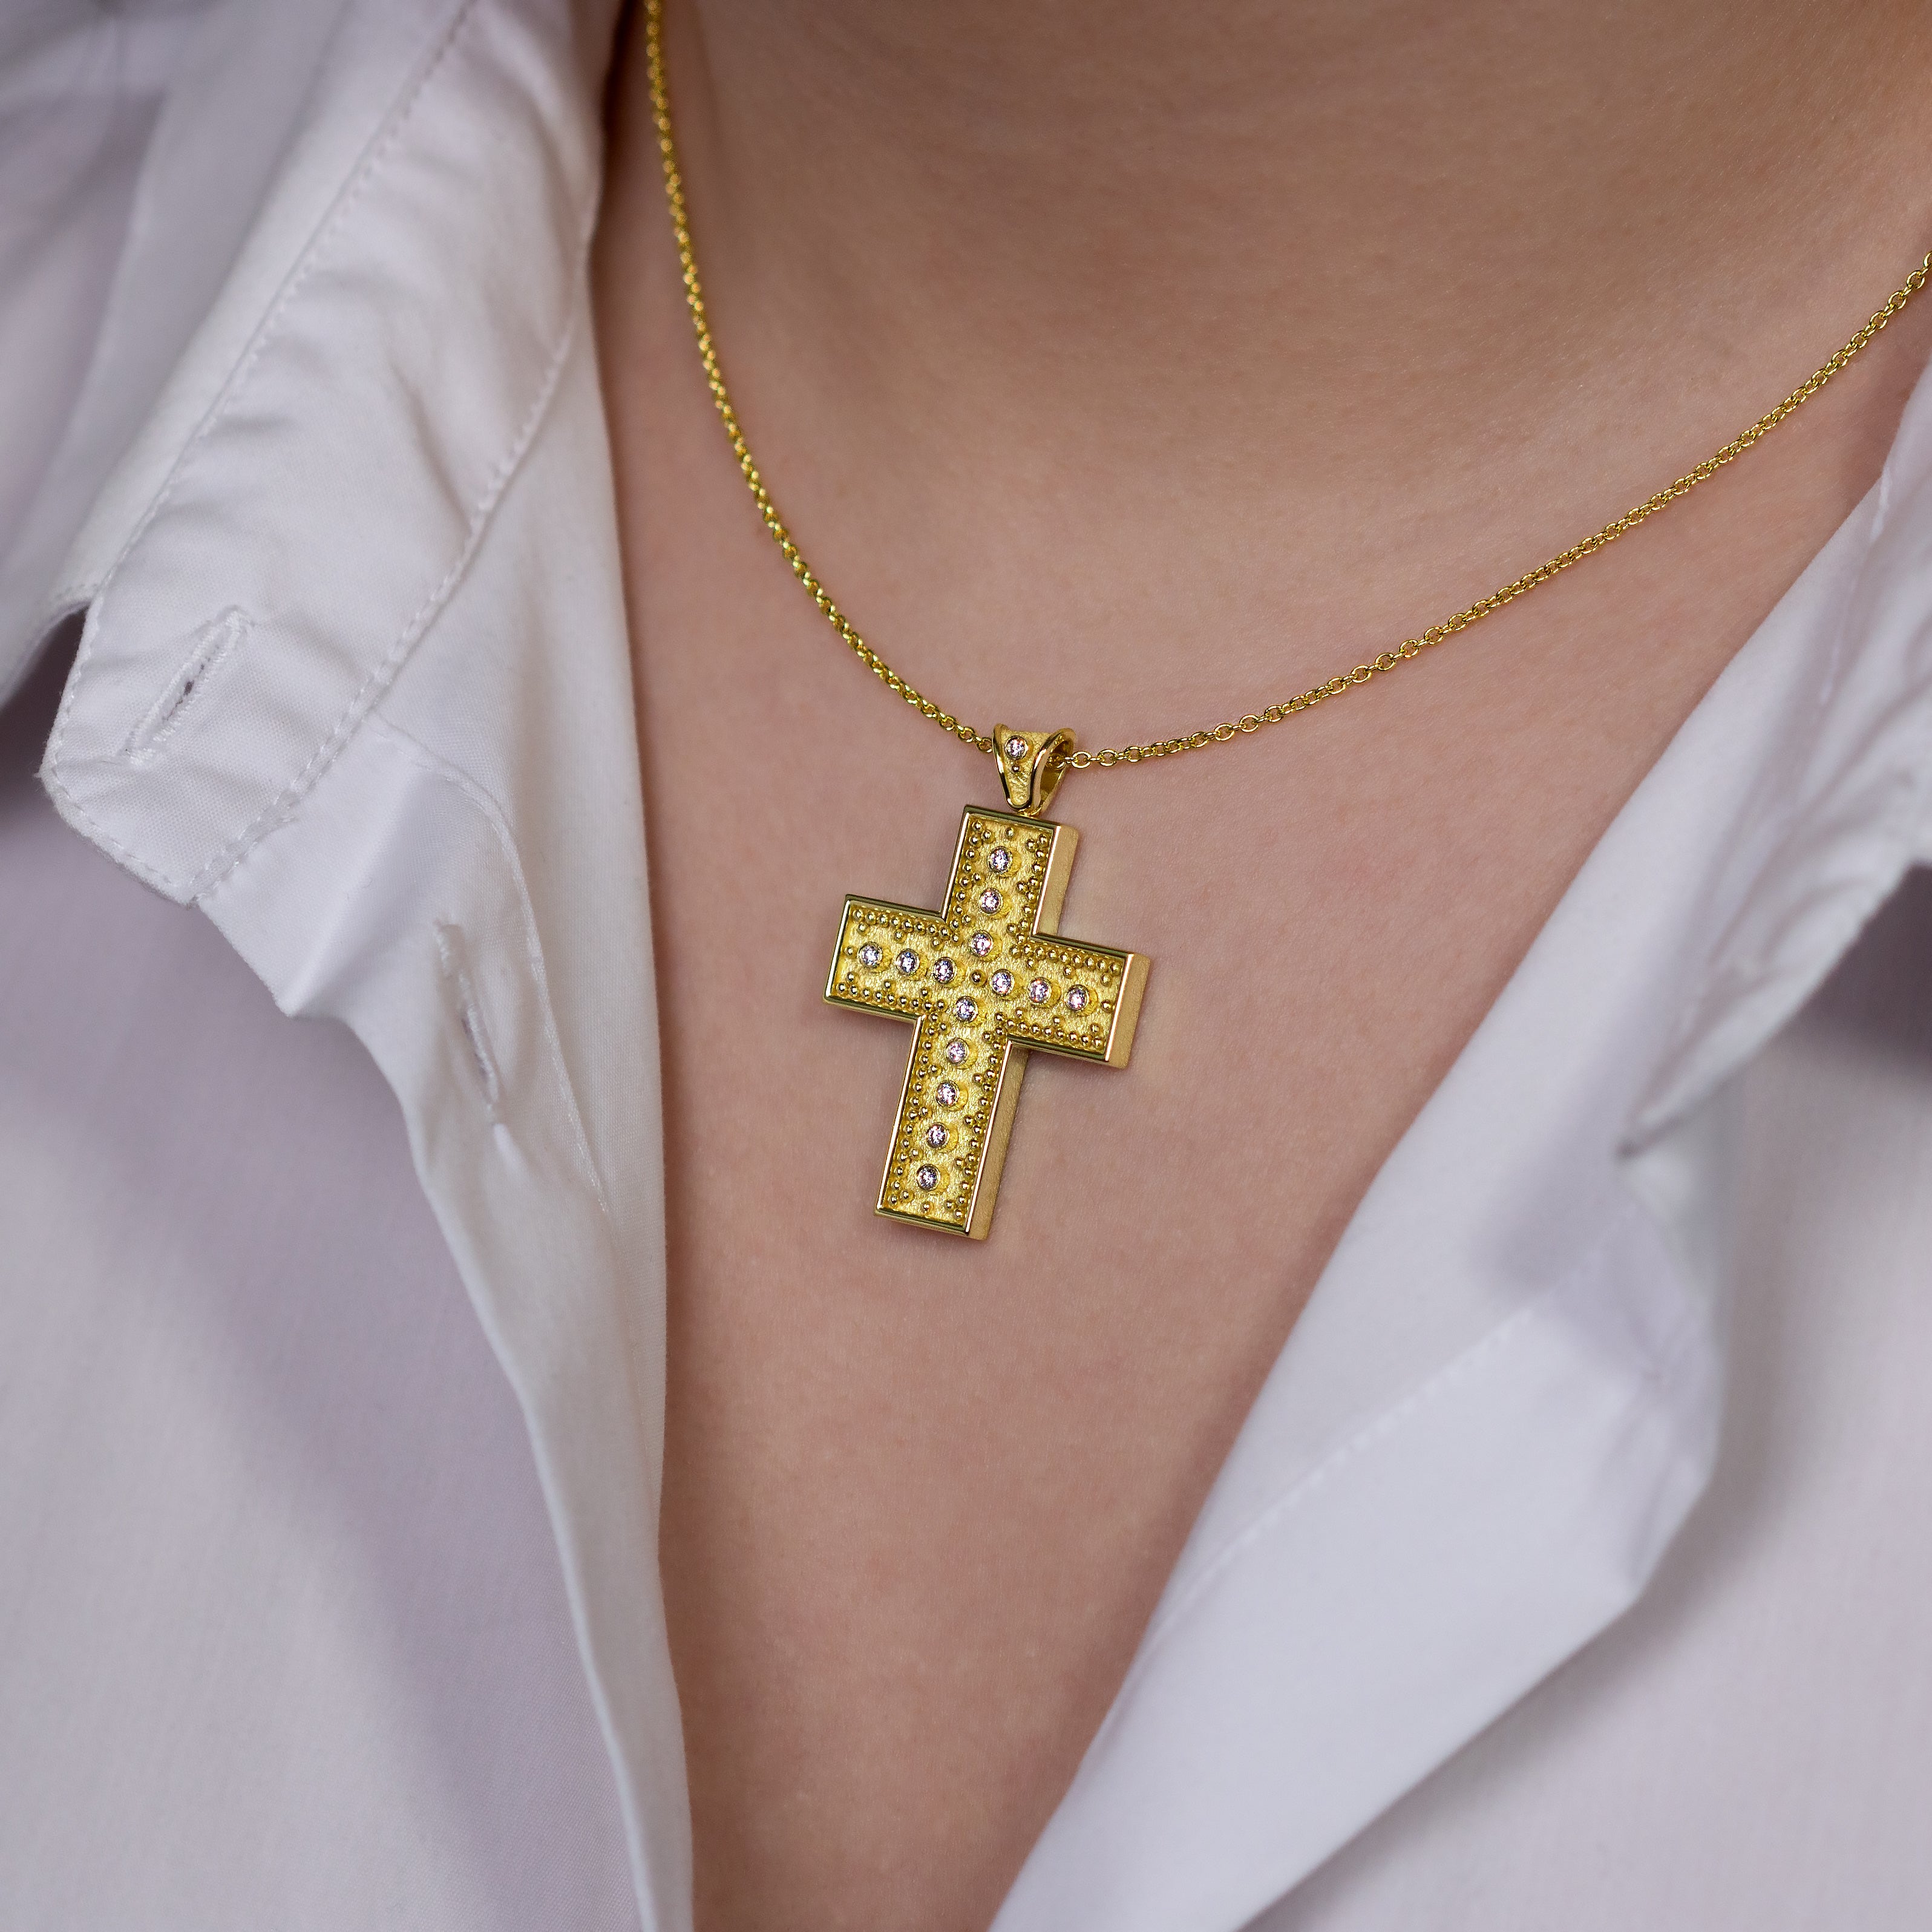 Byzantine Square Cross Pendant with Diamonds Odysseus Jewelry